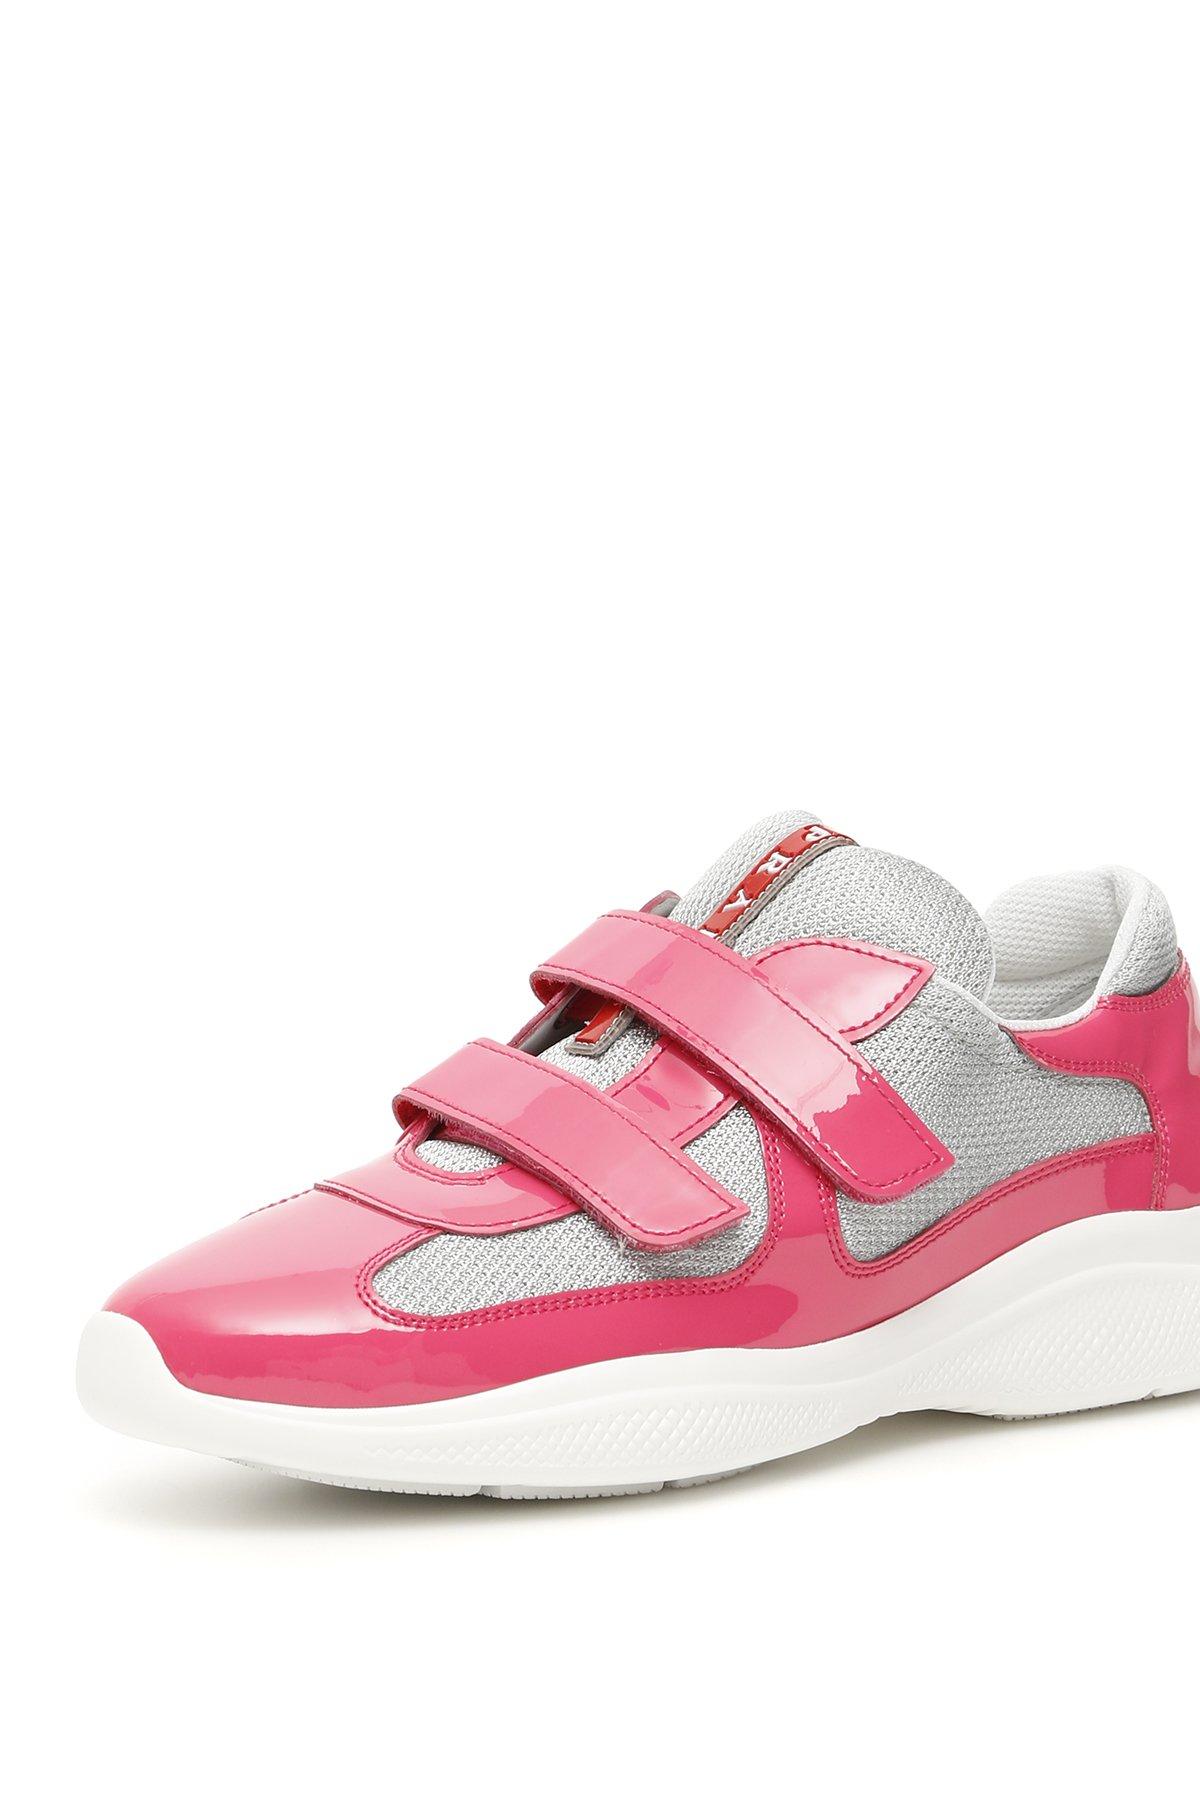 undersøgelse motivet Skuffelse Prada Velcro Strap Contrasting Panelled Sneakers in Pink | Lyst